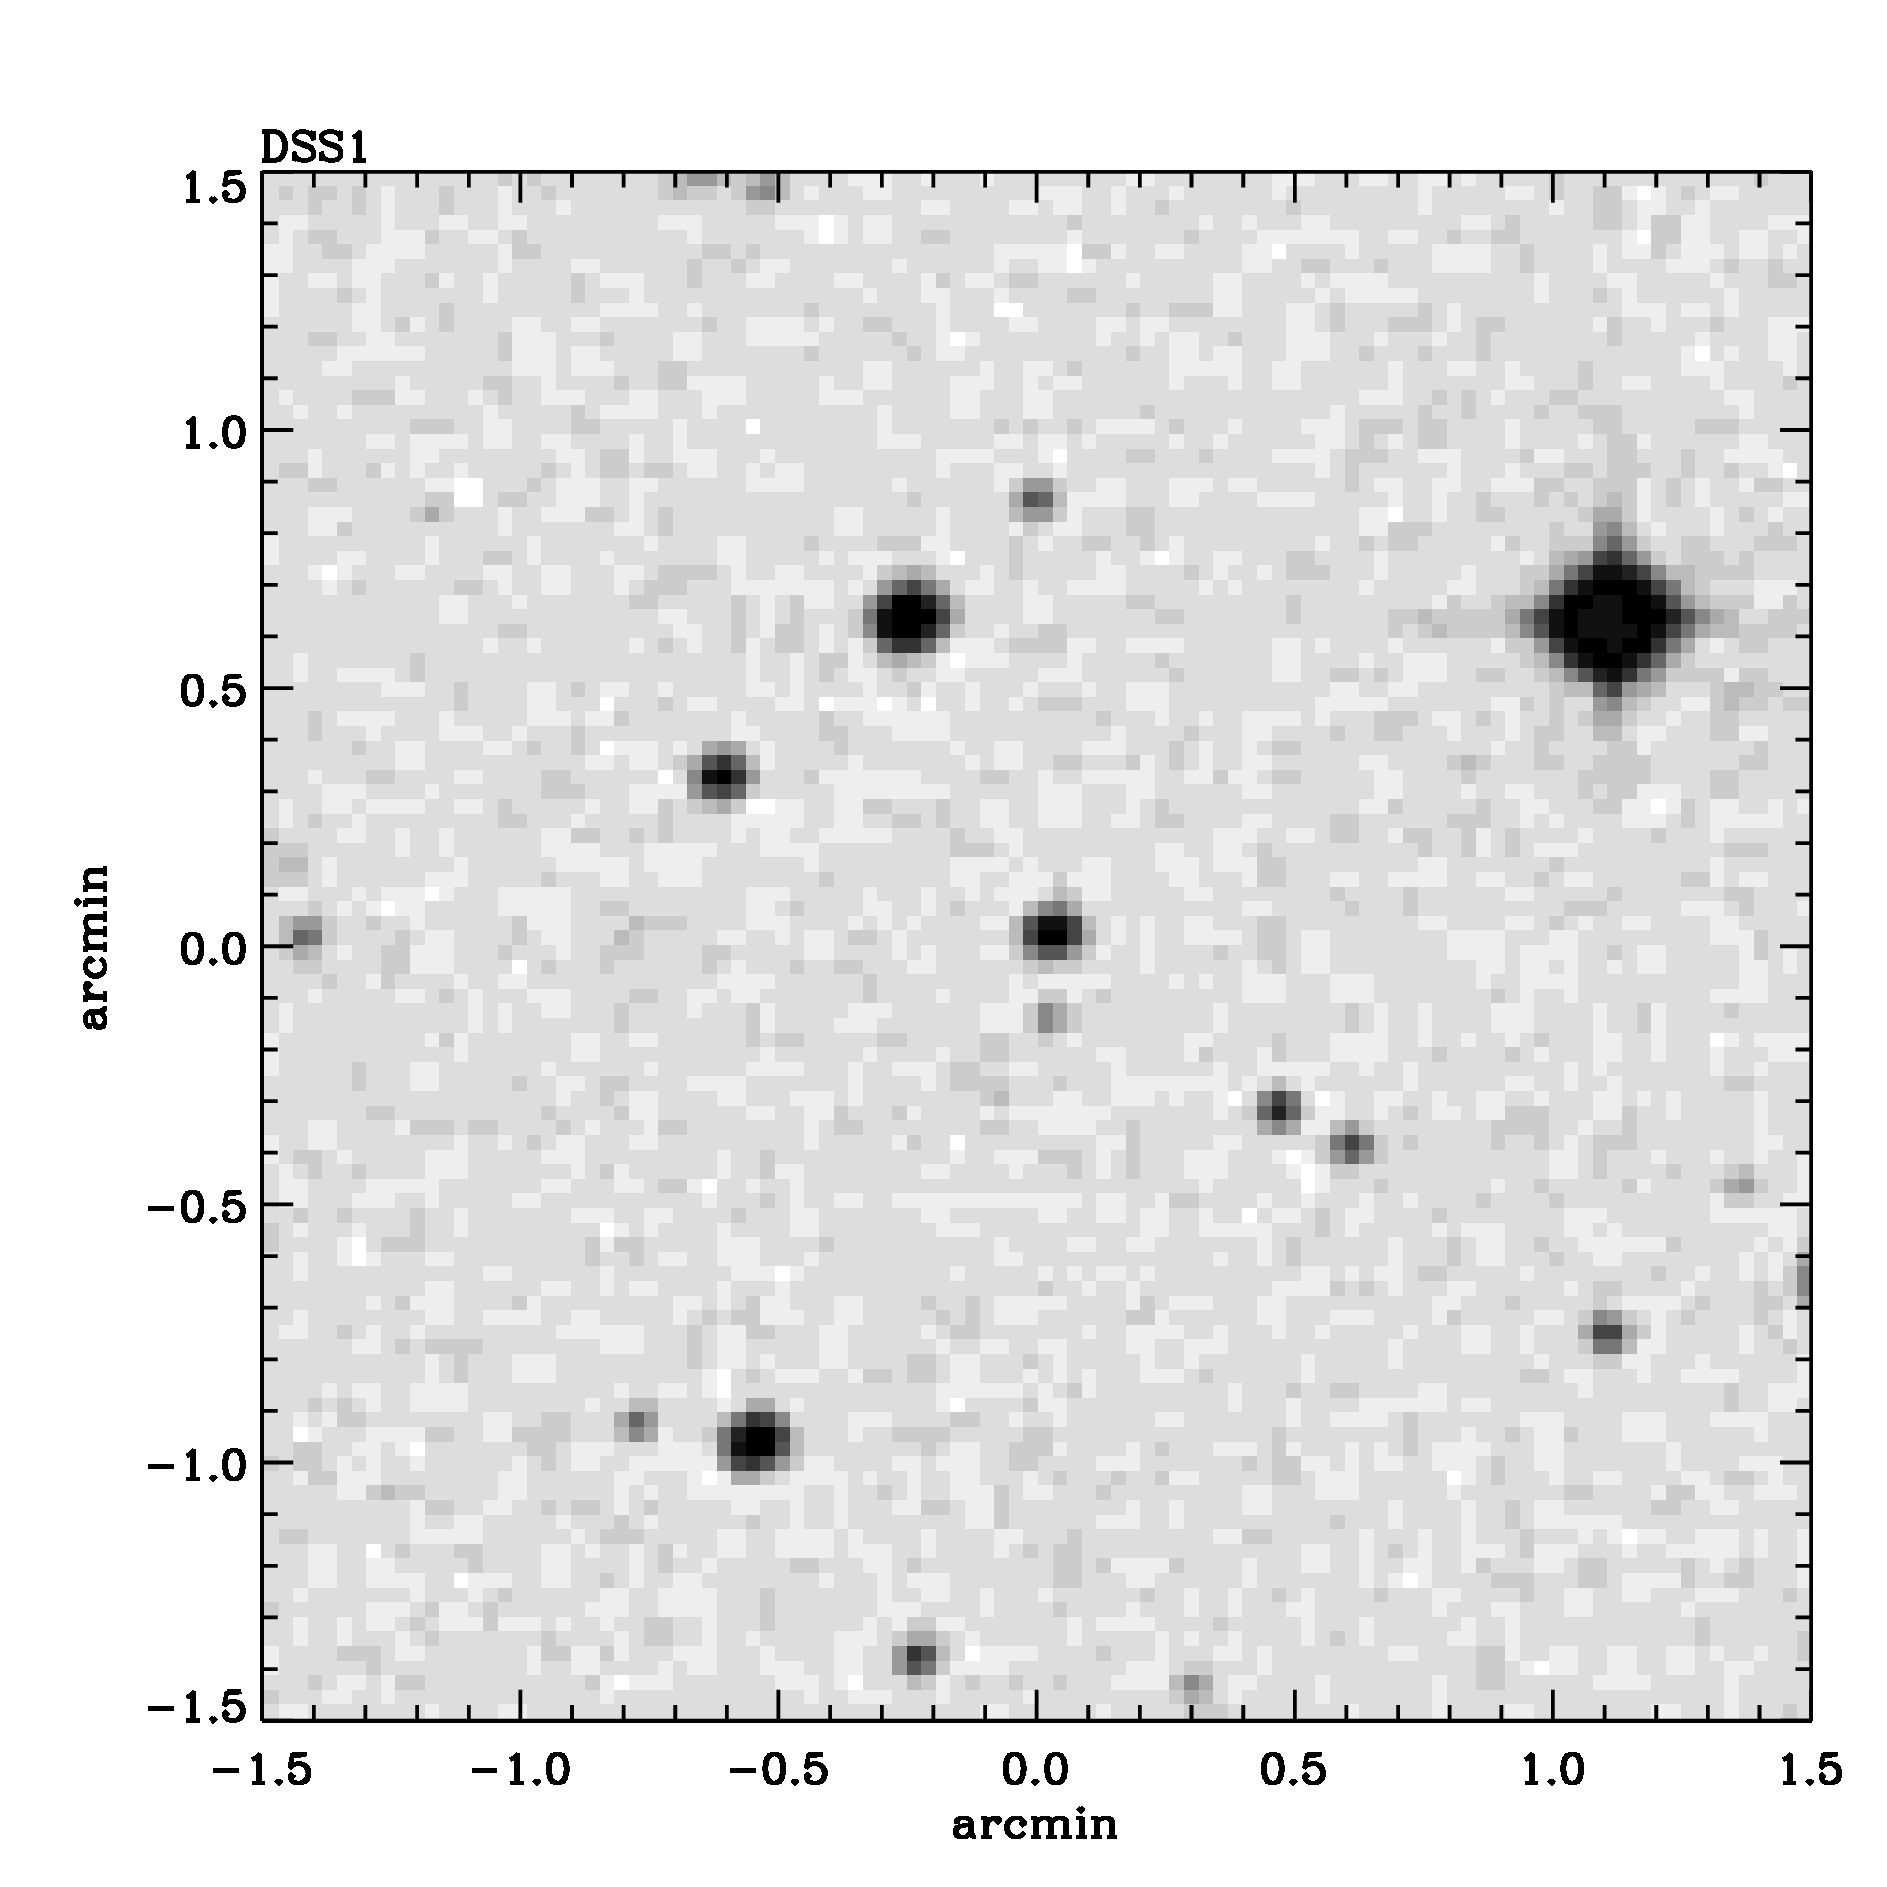 Optical image for SWIFT J1512.8-0906